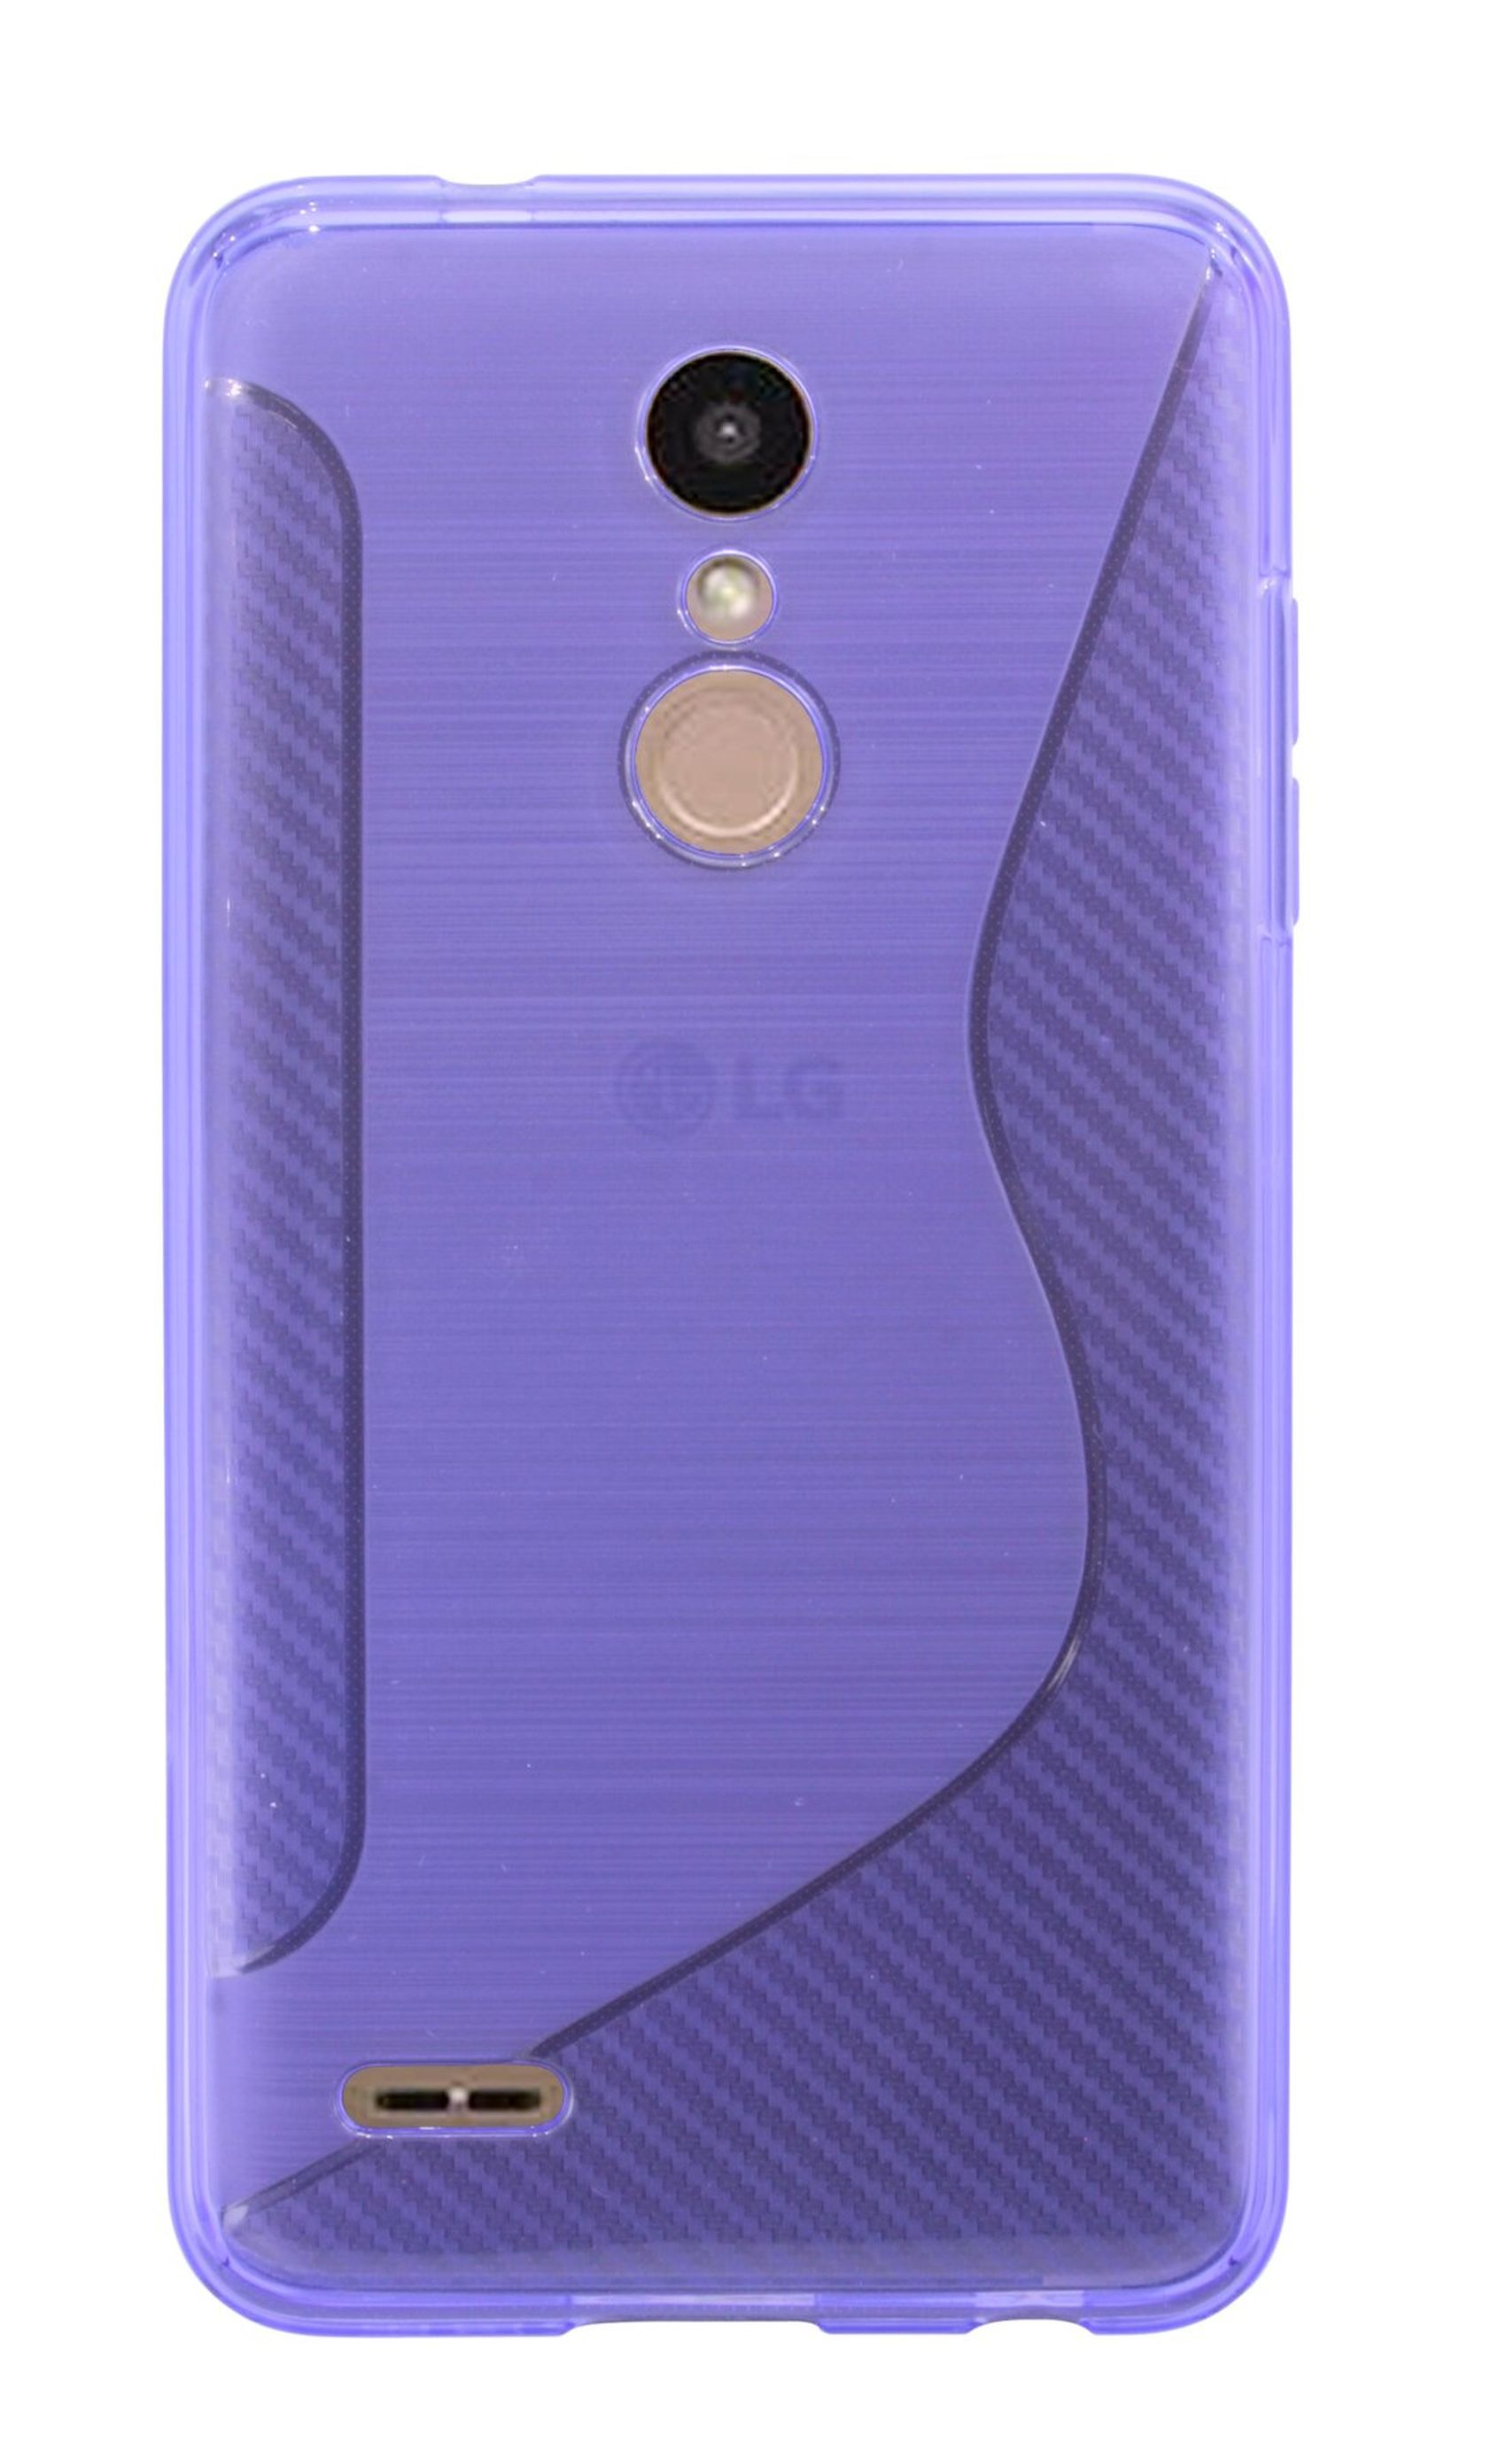 SchutzHülle Lila, LG Violett Case Cover COFI LG, Hülle Silikonschale TPU Bumper K9//S-Line Bumper, Zubehör Silikon K9, in